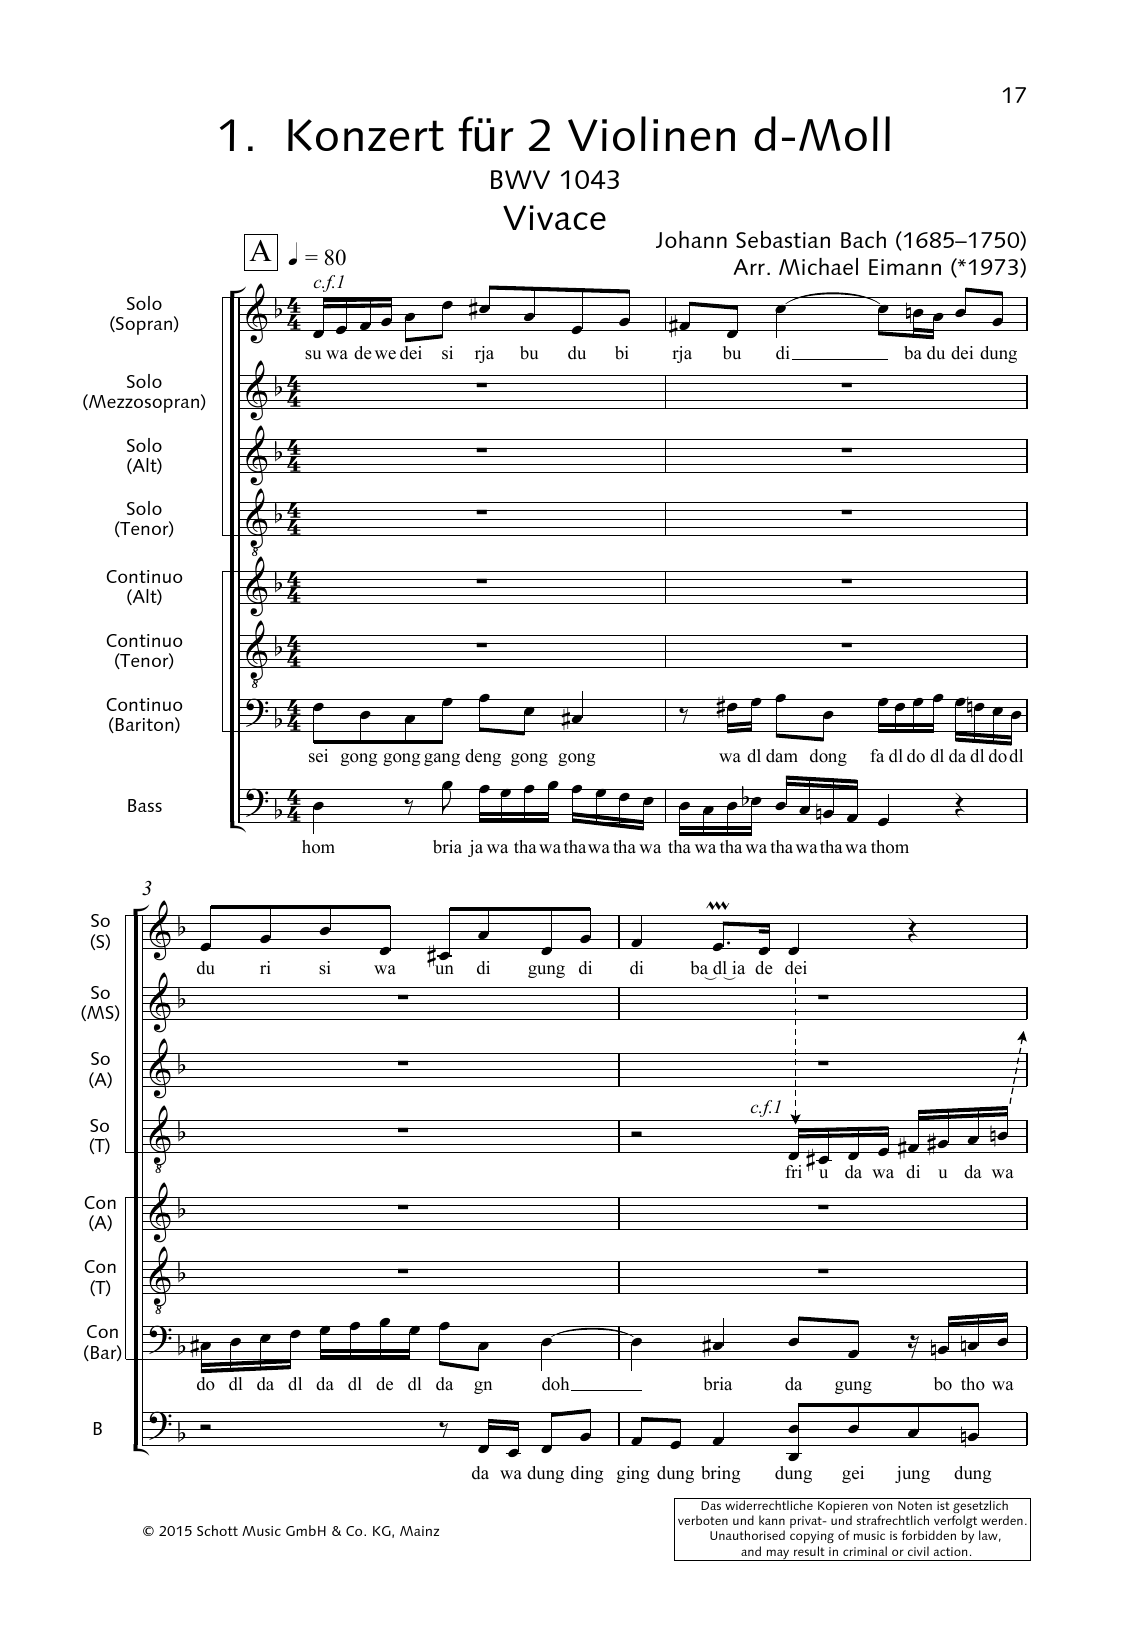 Johann Sebastian Bach Concerto for 2 Violins (Vivace) Sheet Music Notes & Chords for Choral - Download or Print PDF